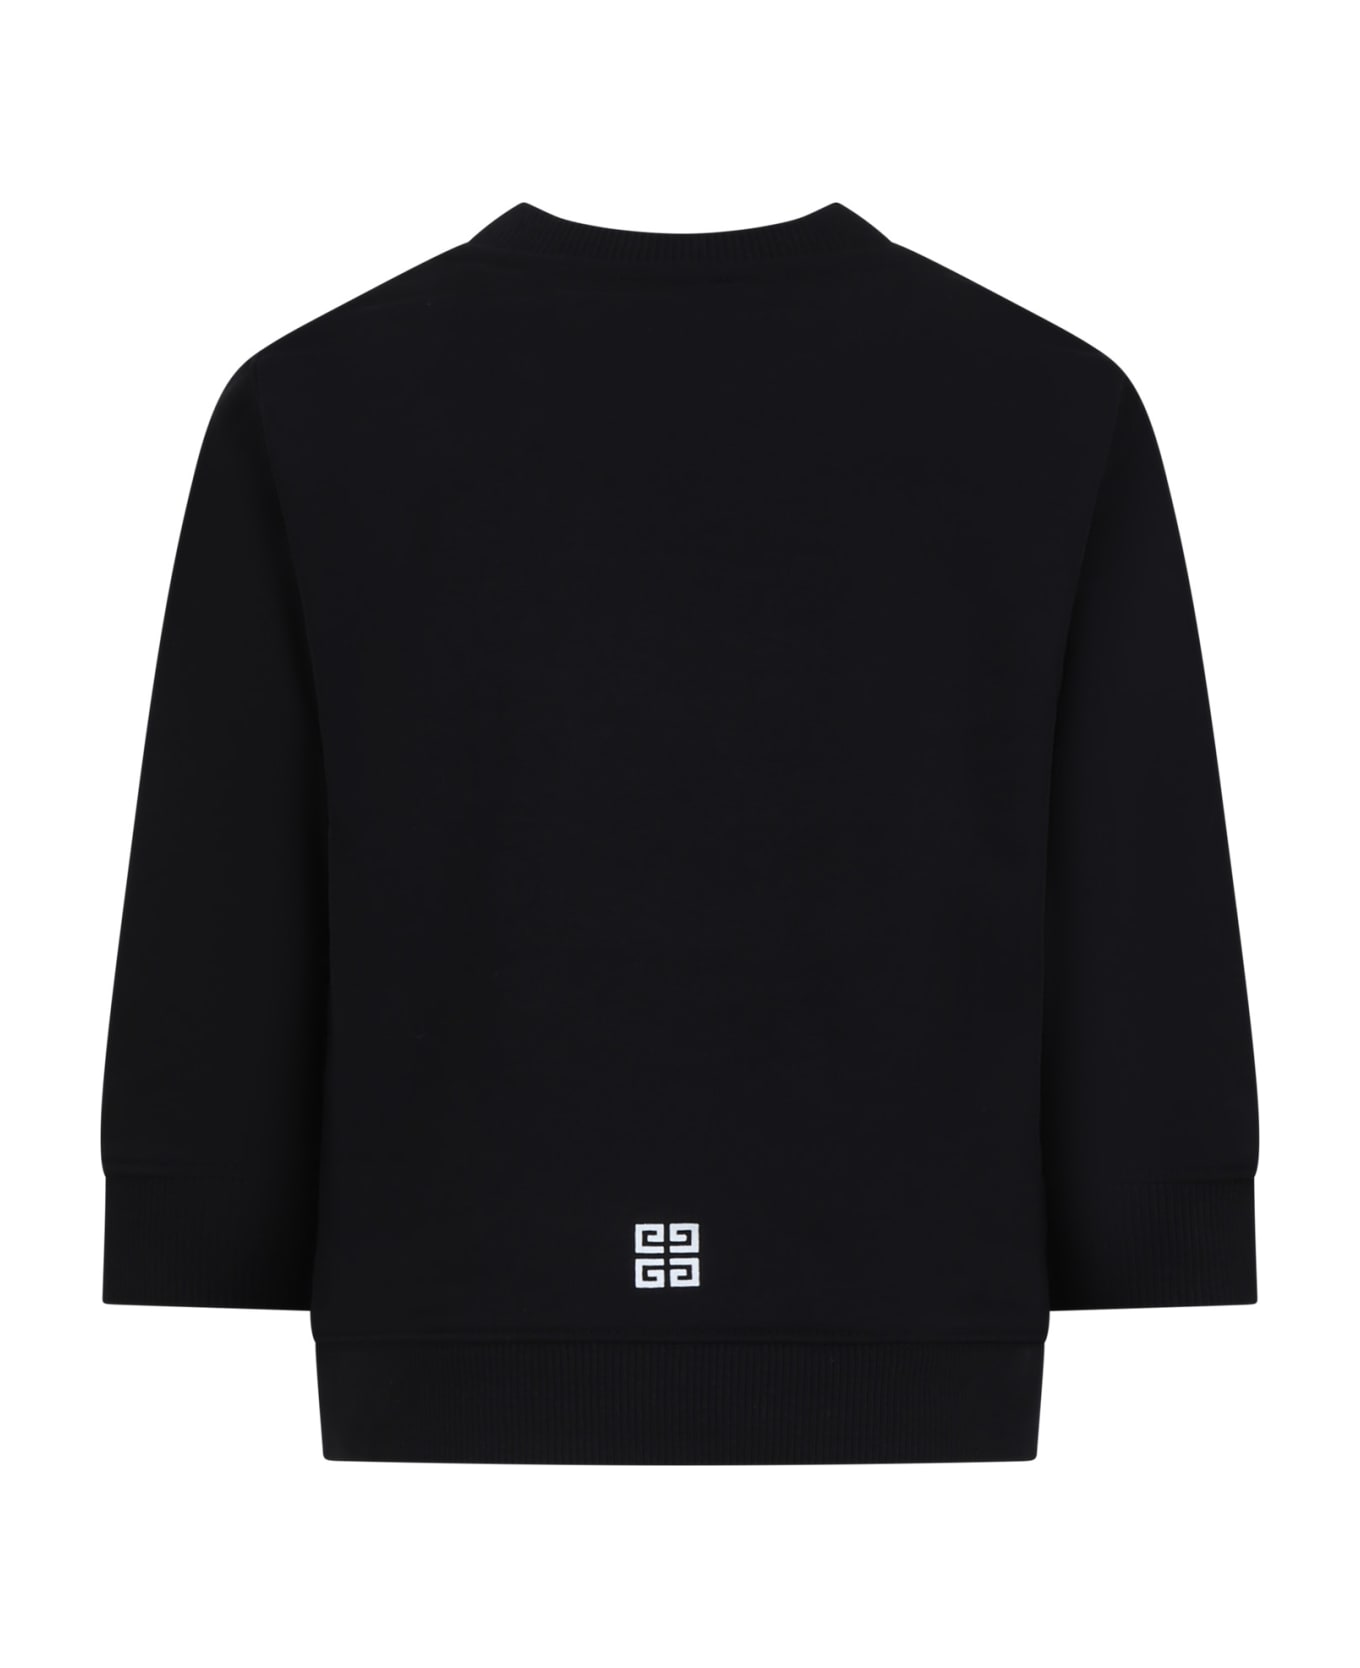 Givenchy Black Sweatshirt For Boy With Logo - Nero